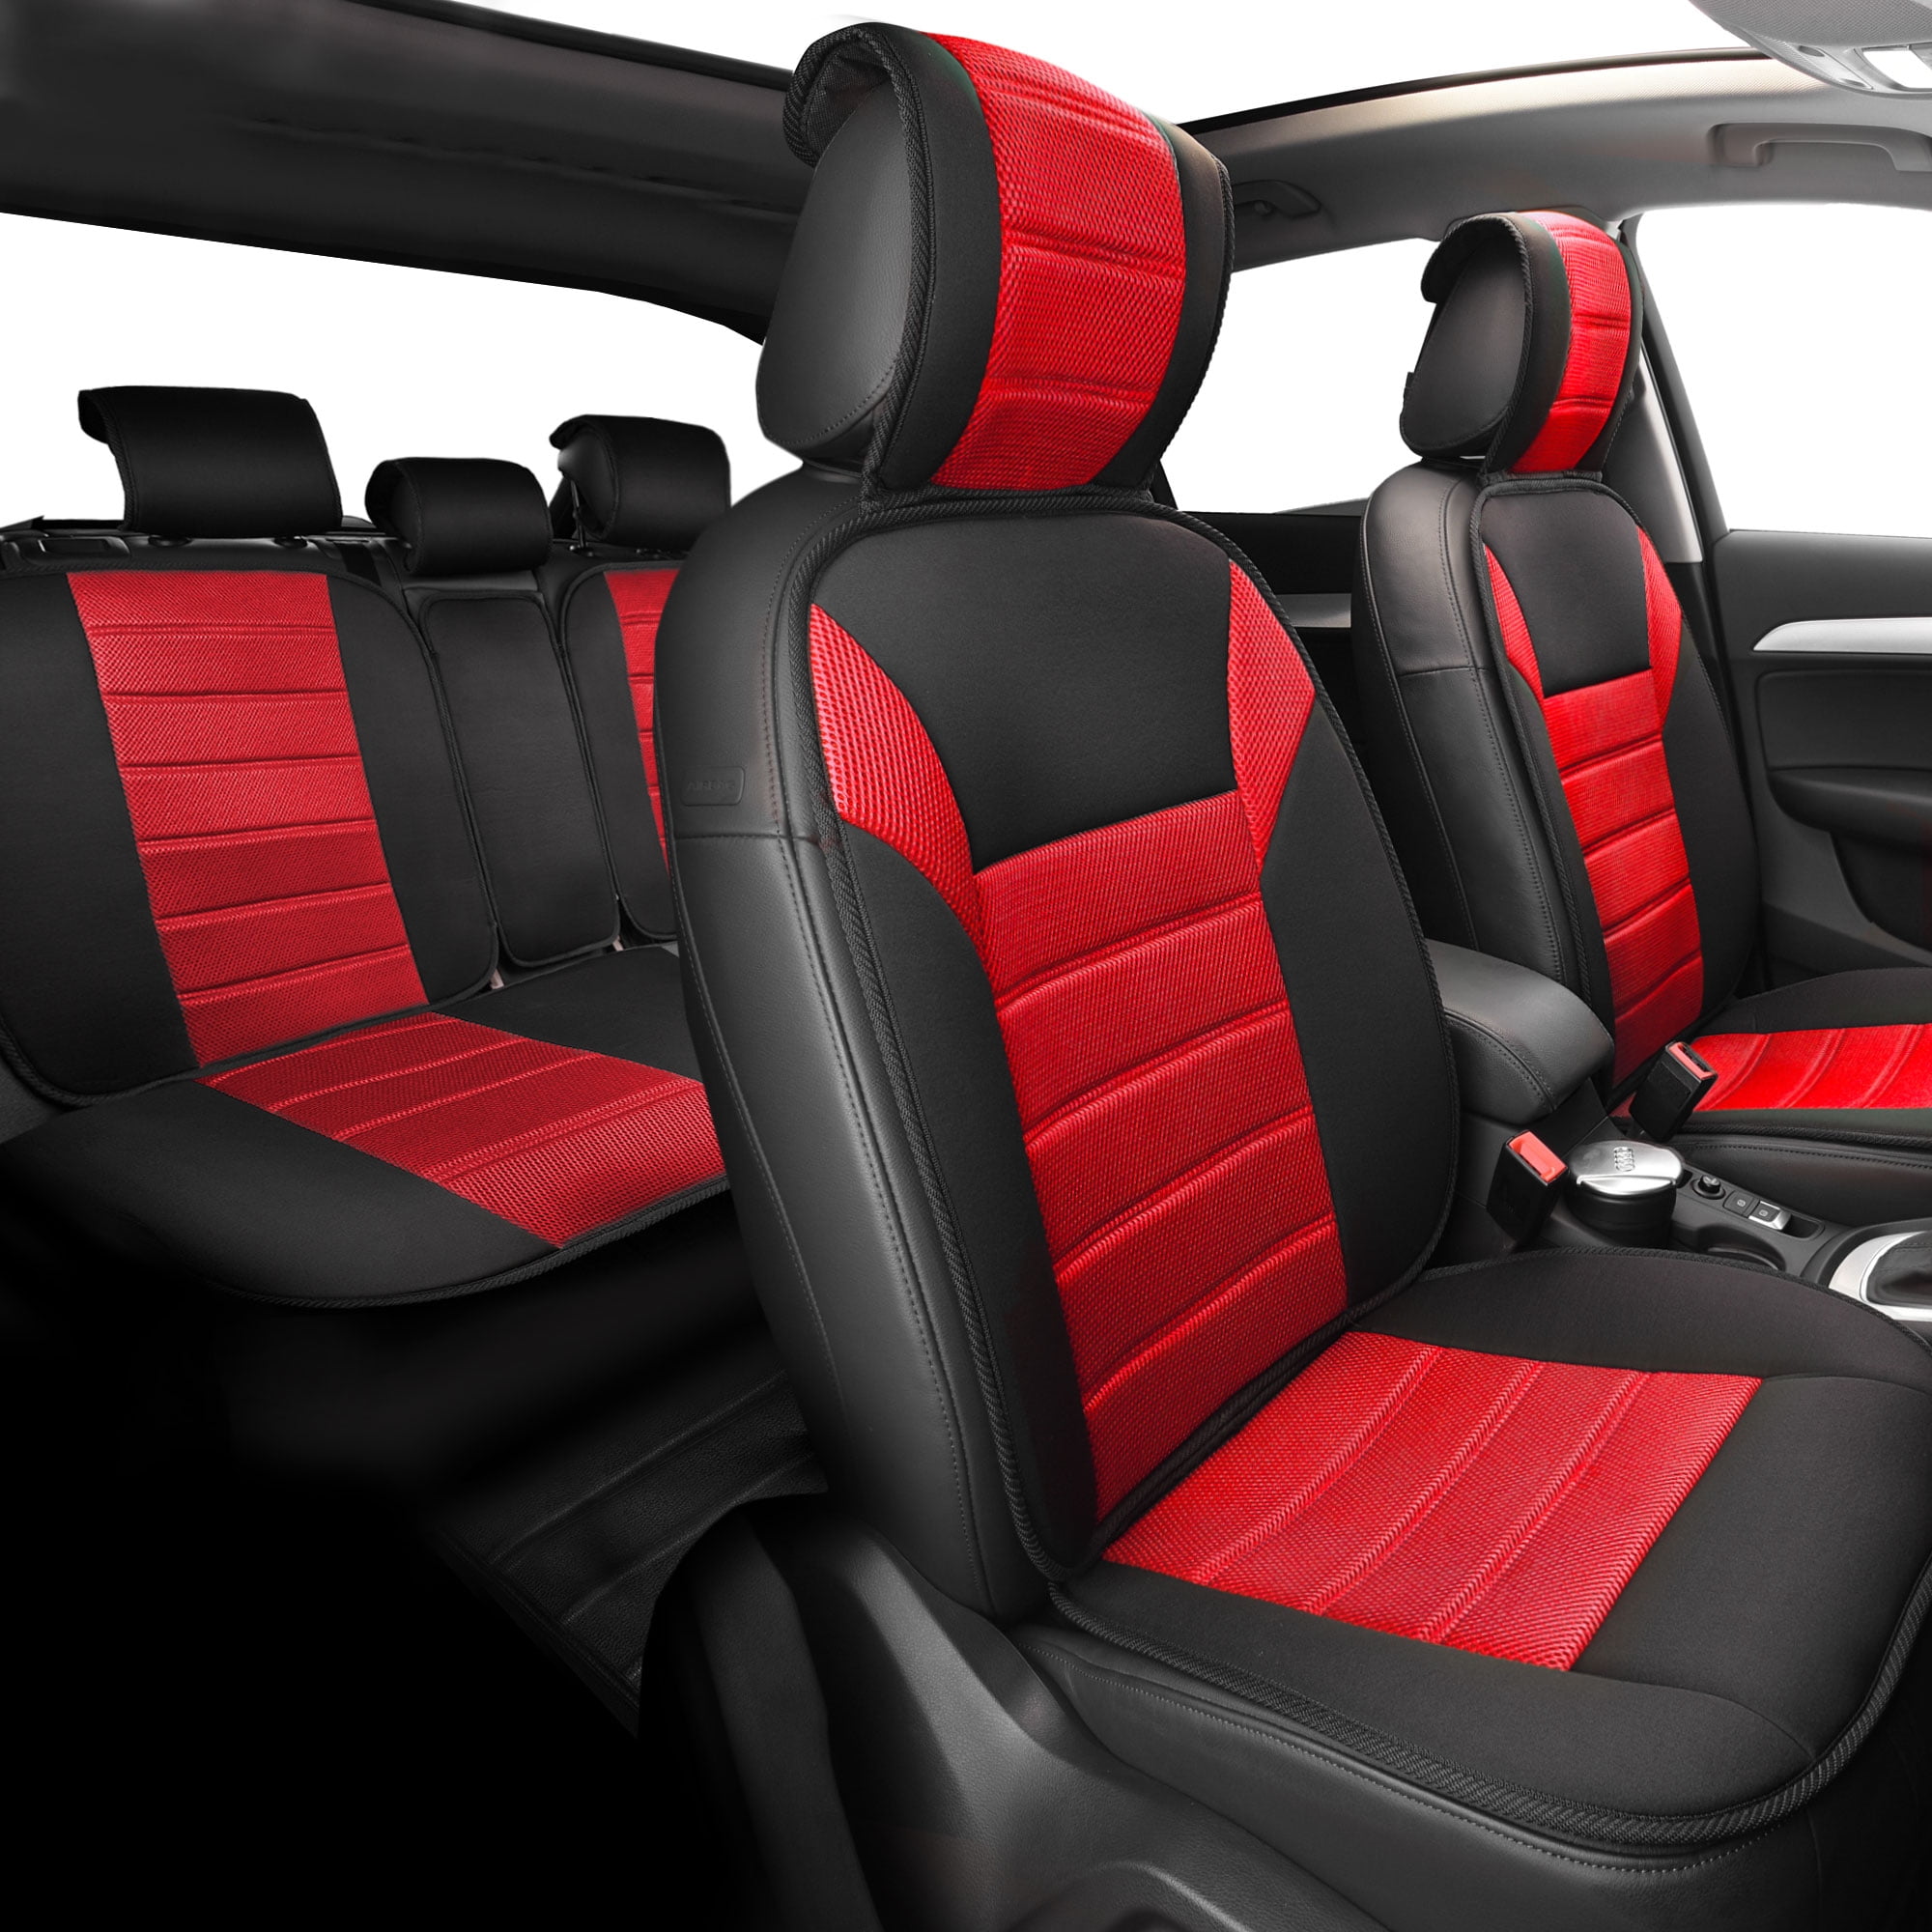 FH Group Premium Universal Car Seat Cushions Set for Car Truck SUV